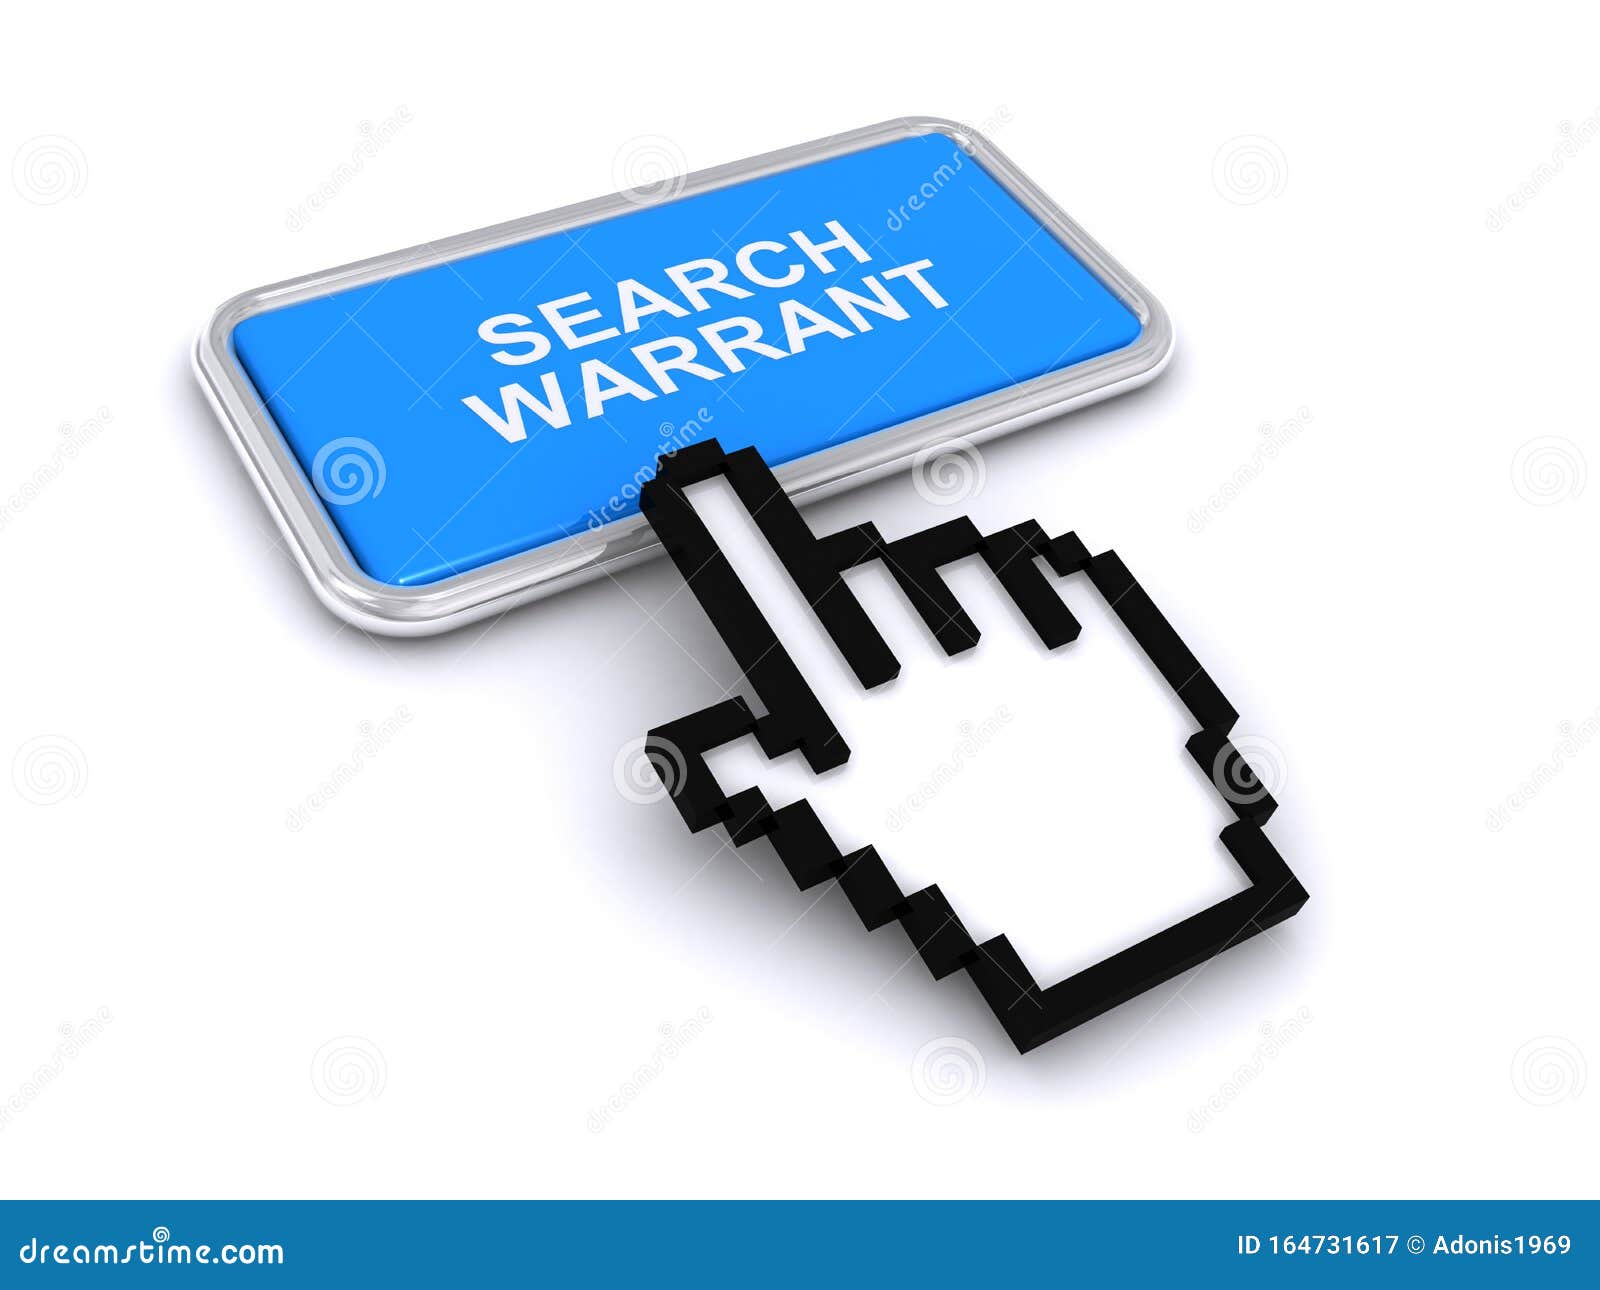 search warrant button on white